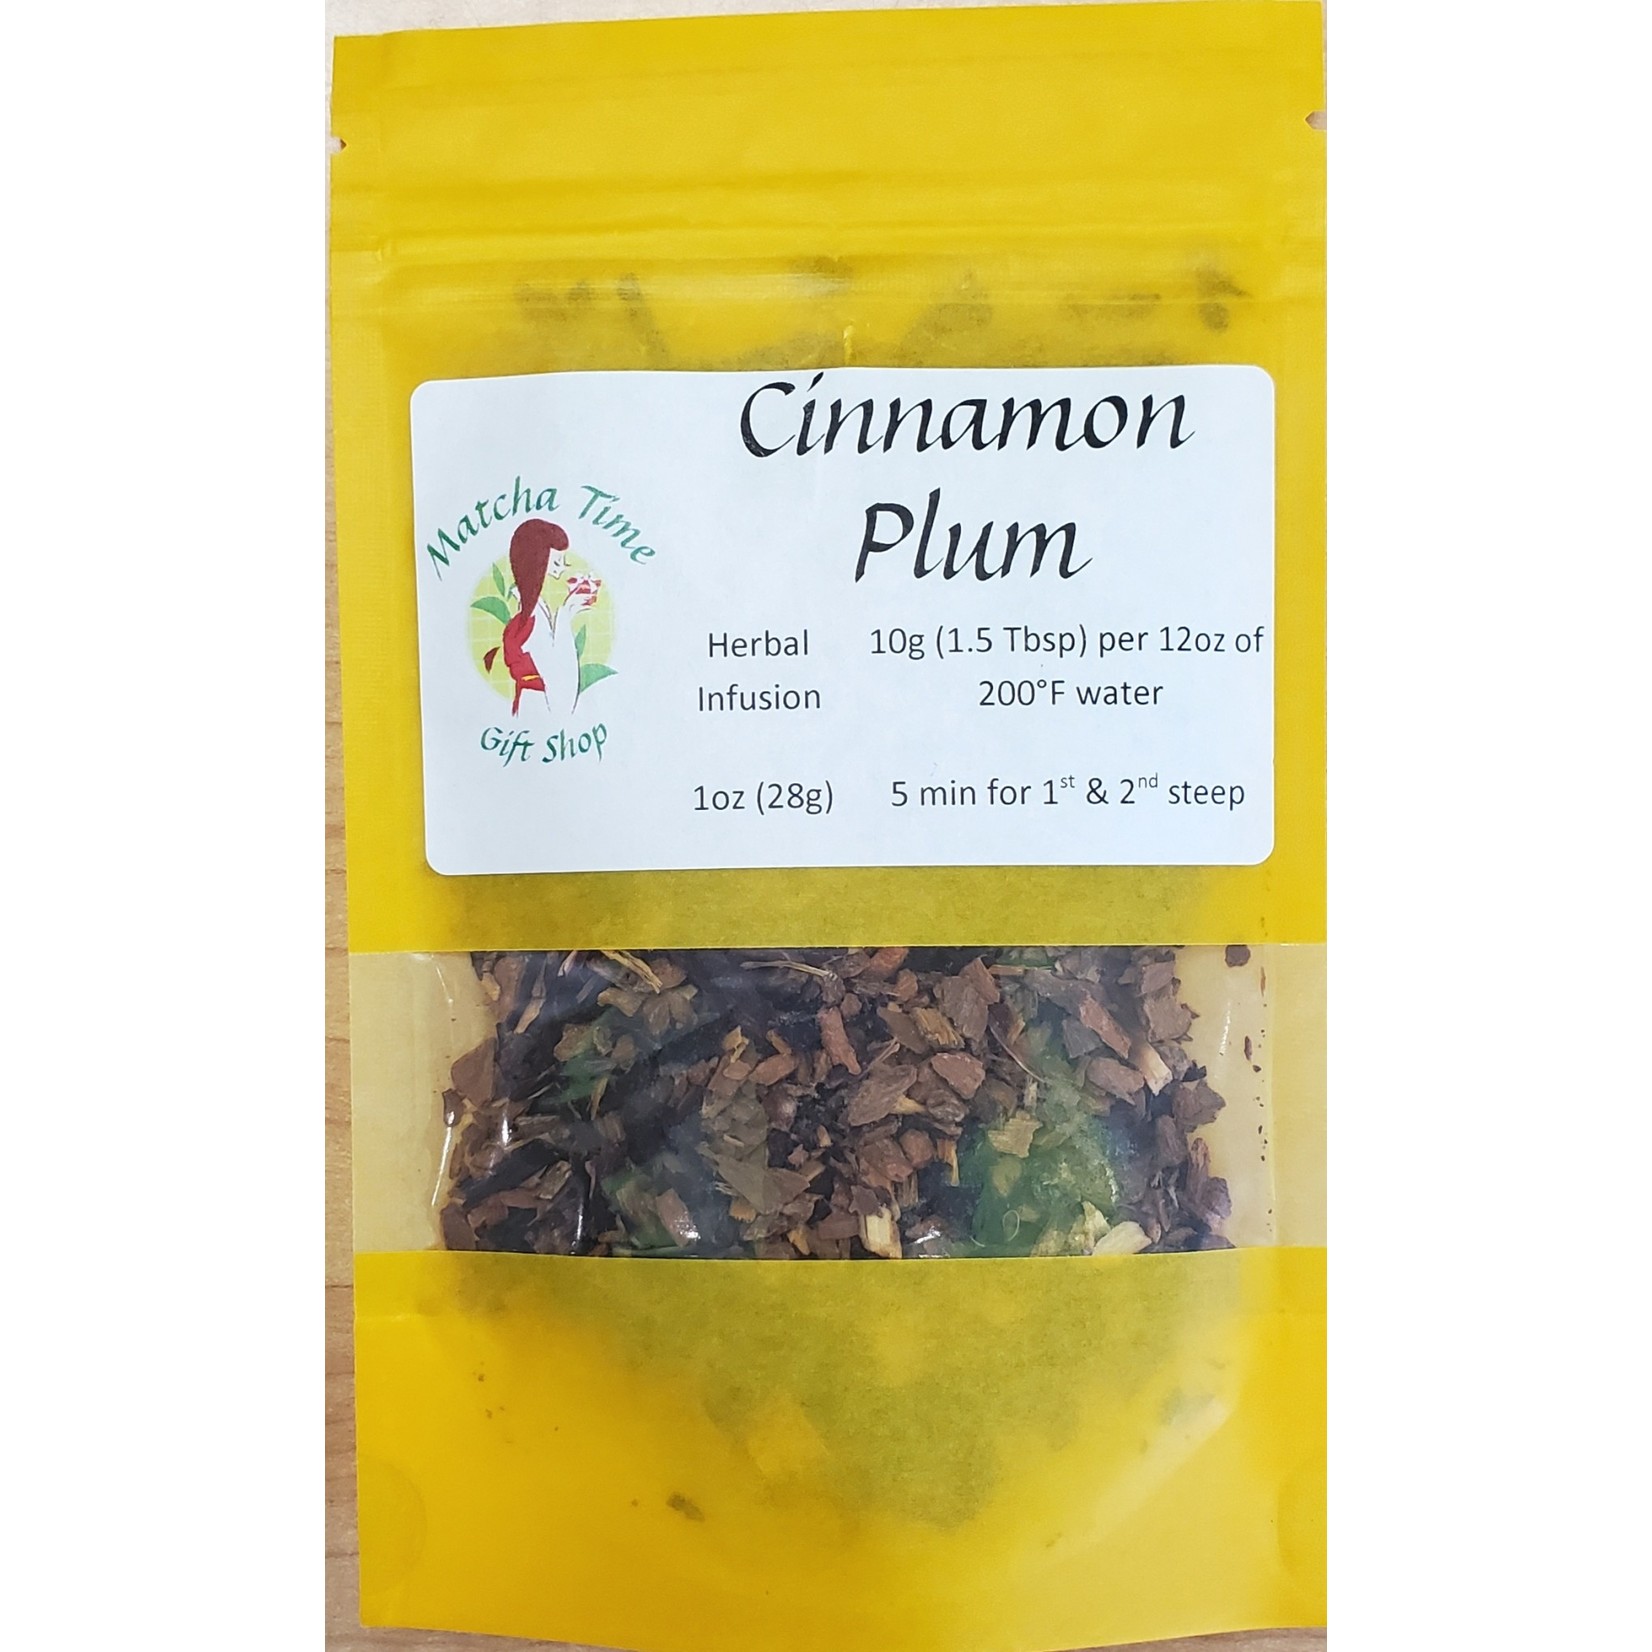 Matcha Time Cafe Cinnamon Plum Herbal Infusion - Loose Leaf 1 oz bag